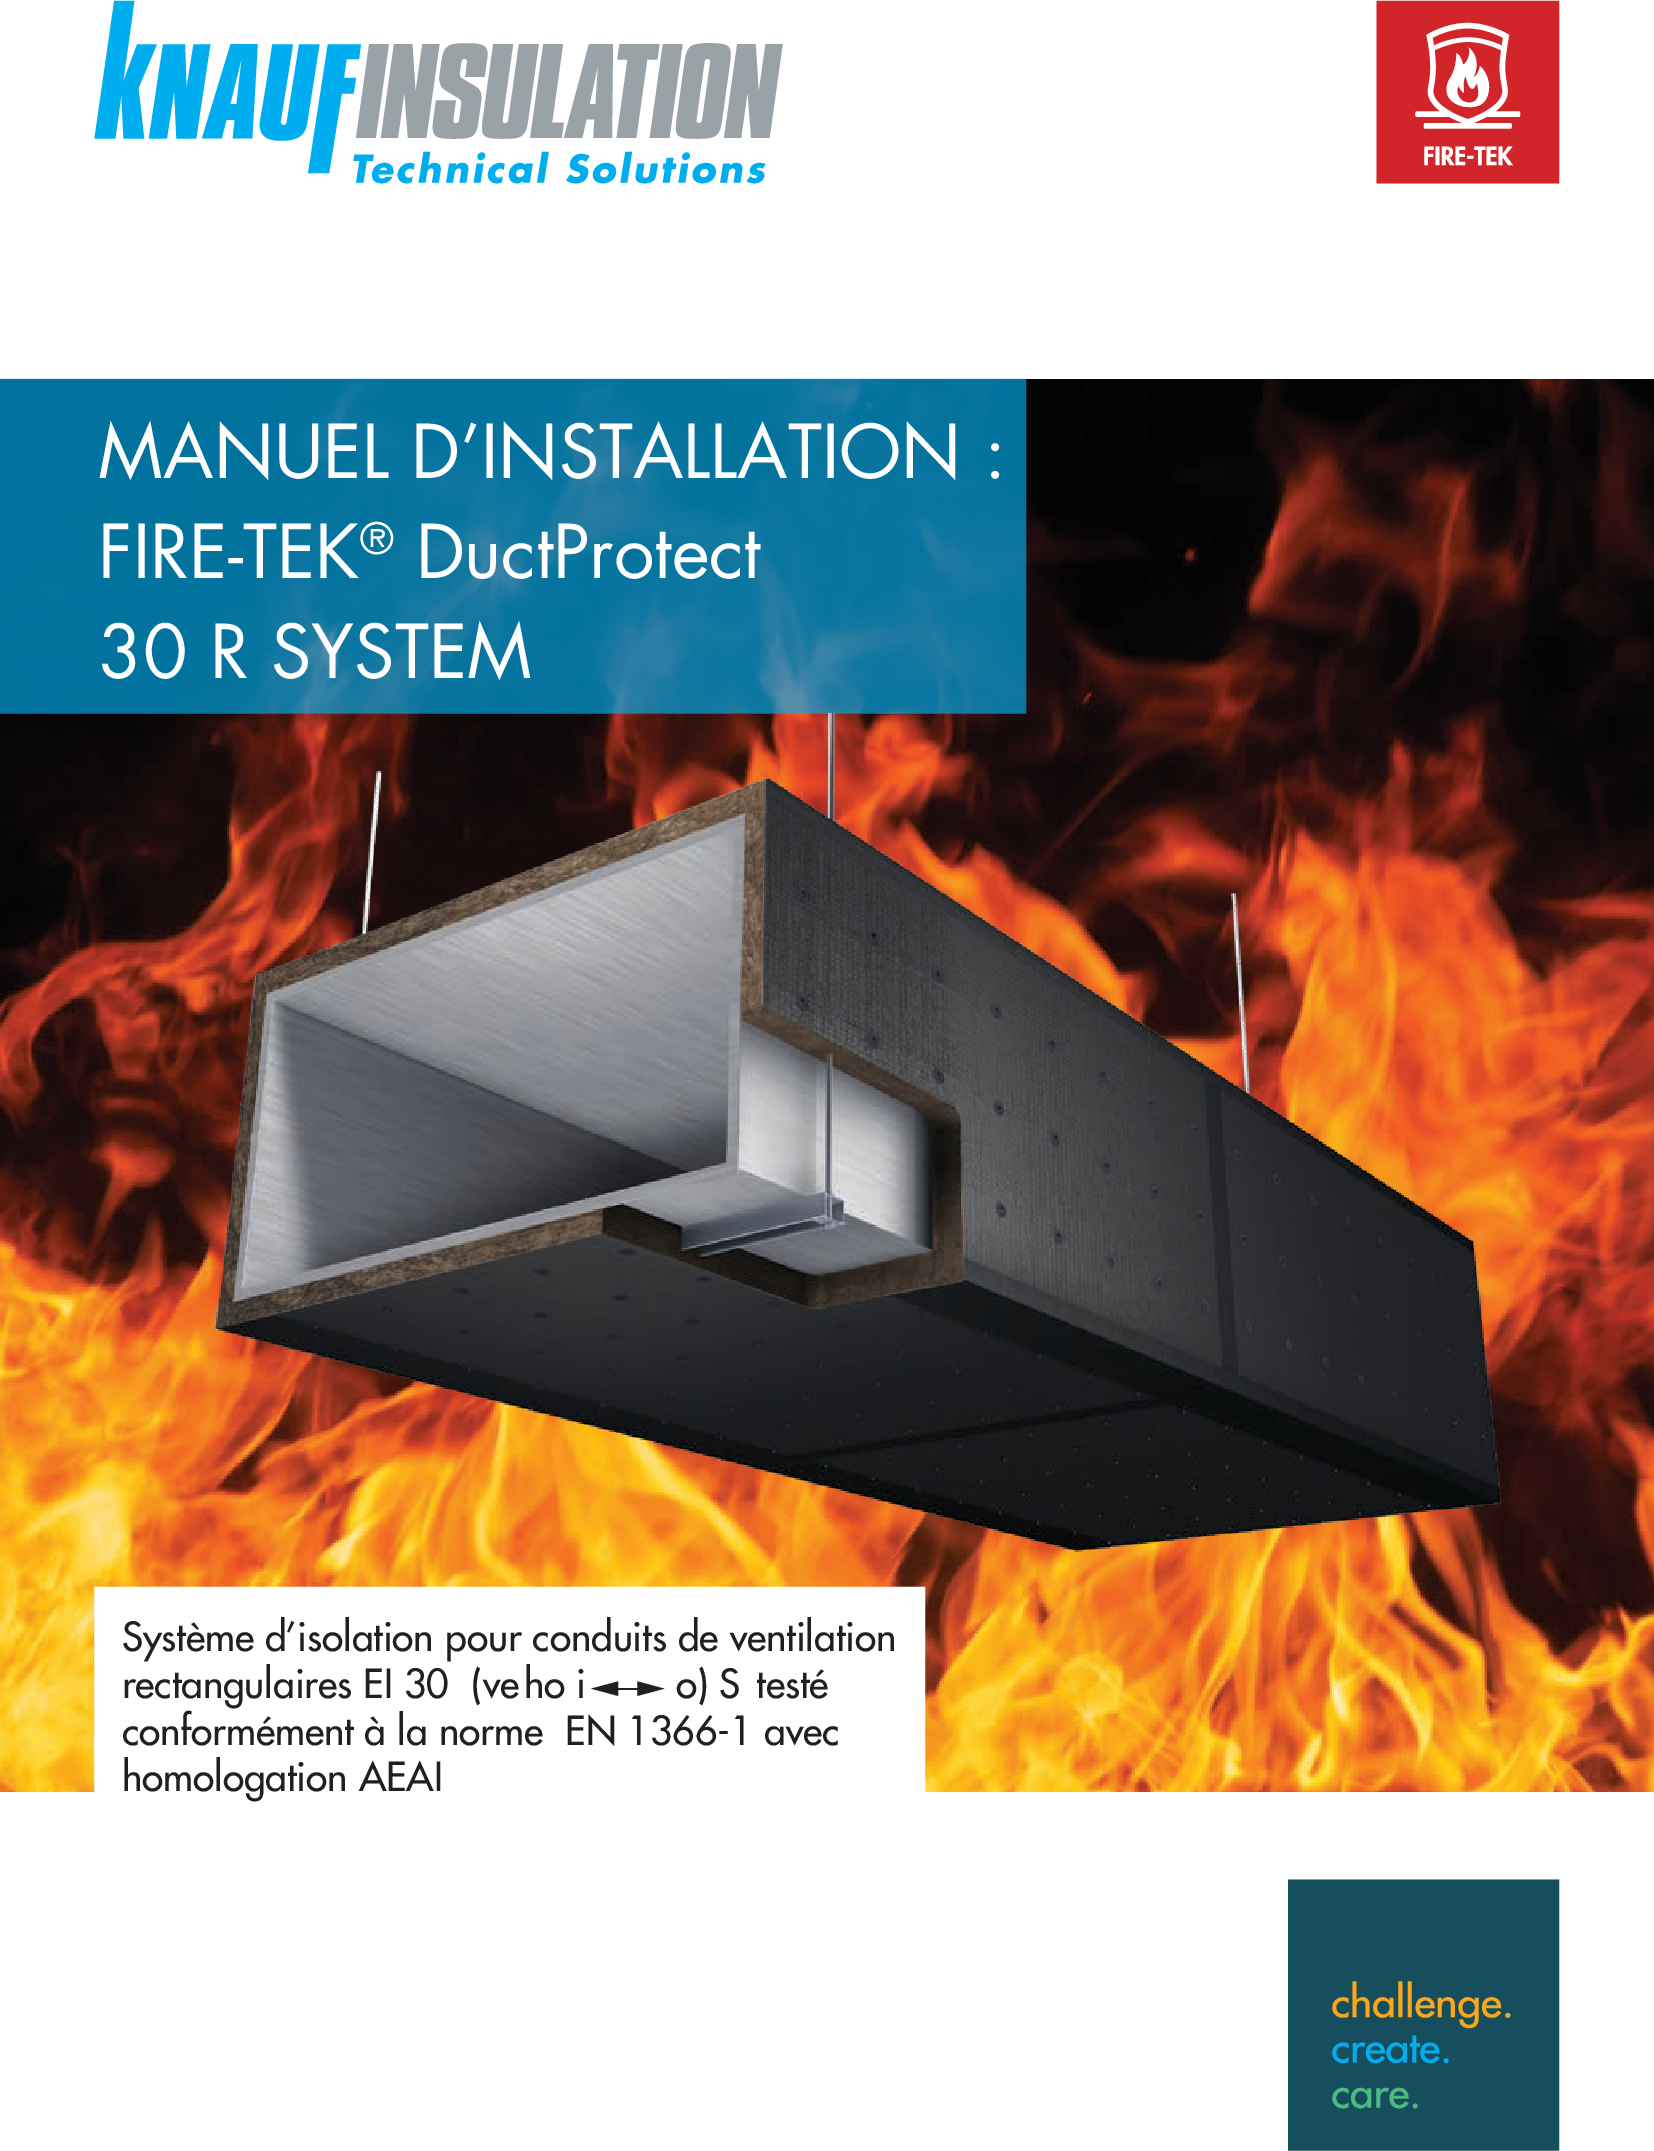 Fire-teK DuctProtect 30 R SYS - MANUEL D’INSTALLATION